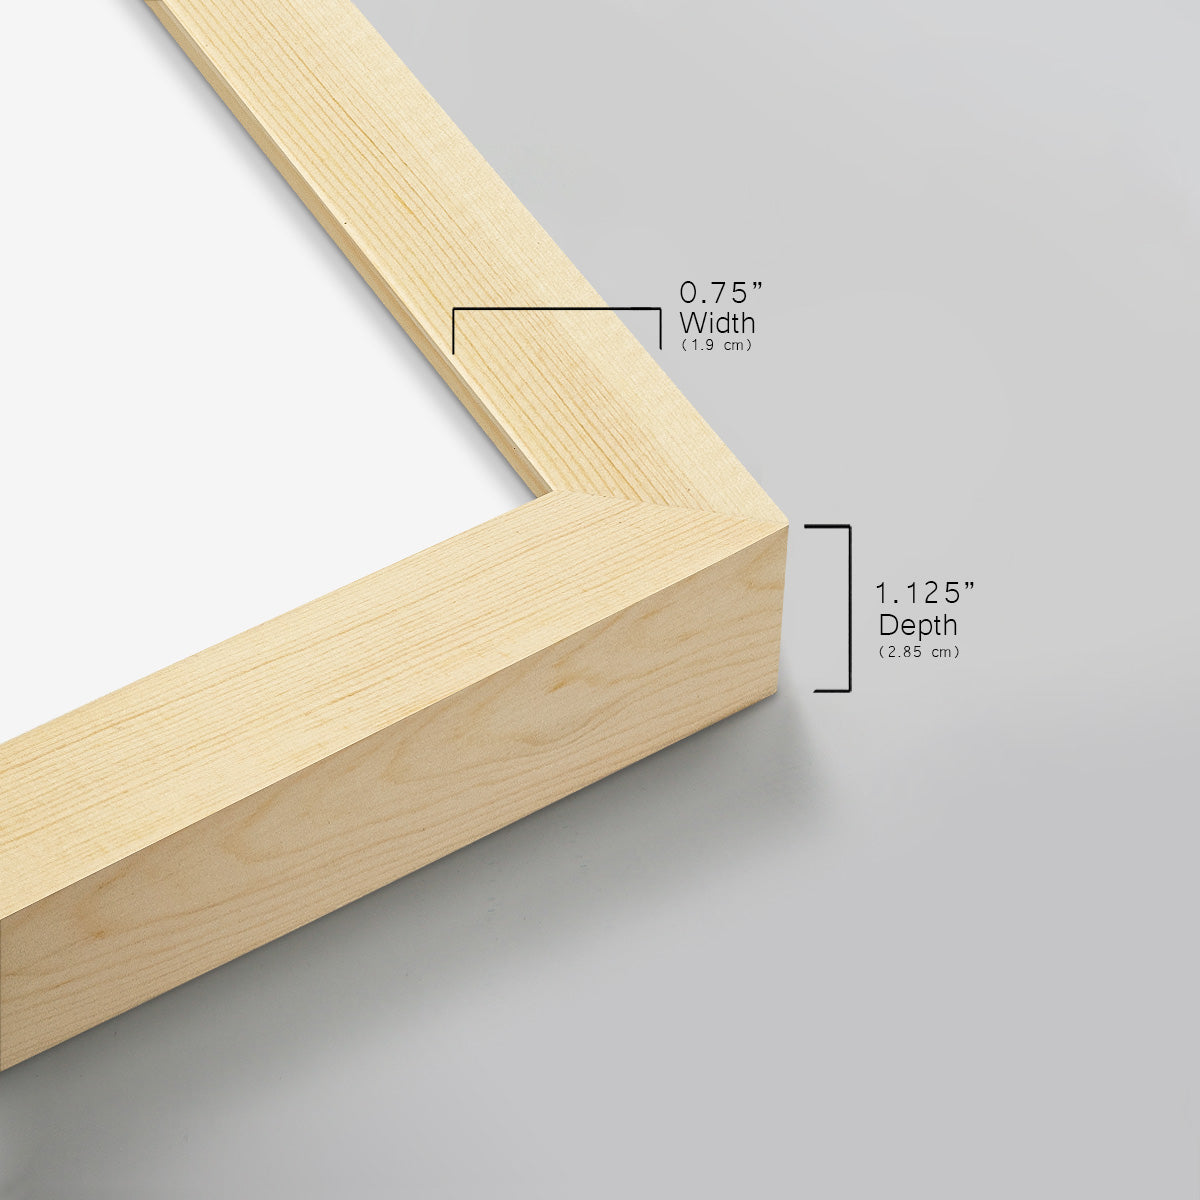 Modern Longhorns II Premium Framed Print Double Matboard